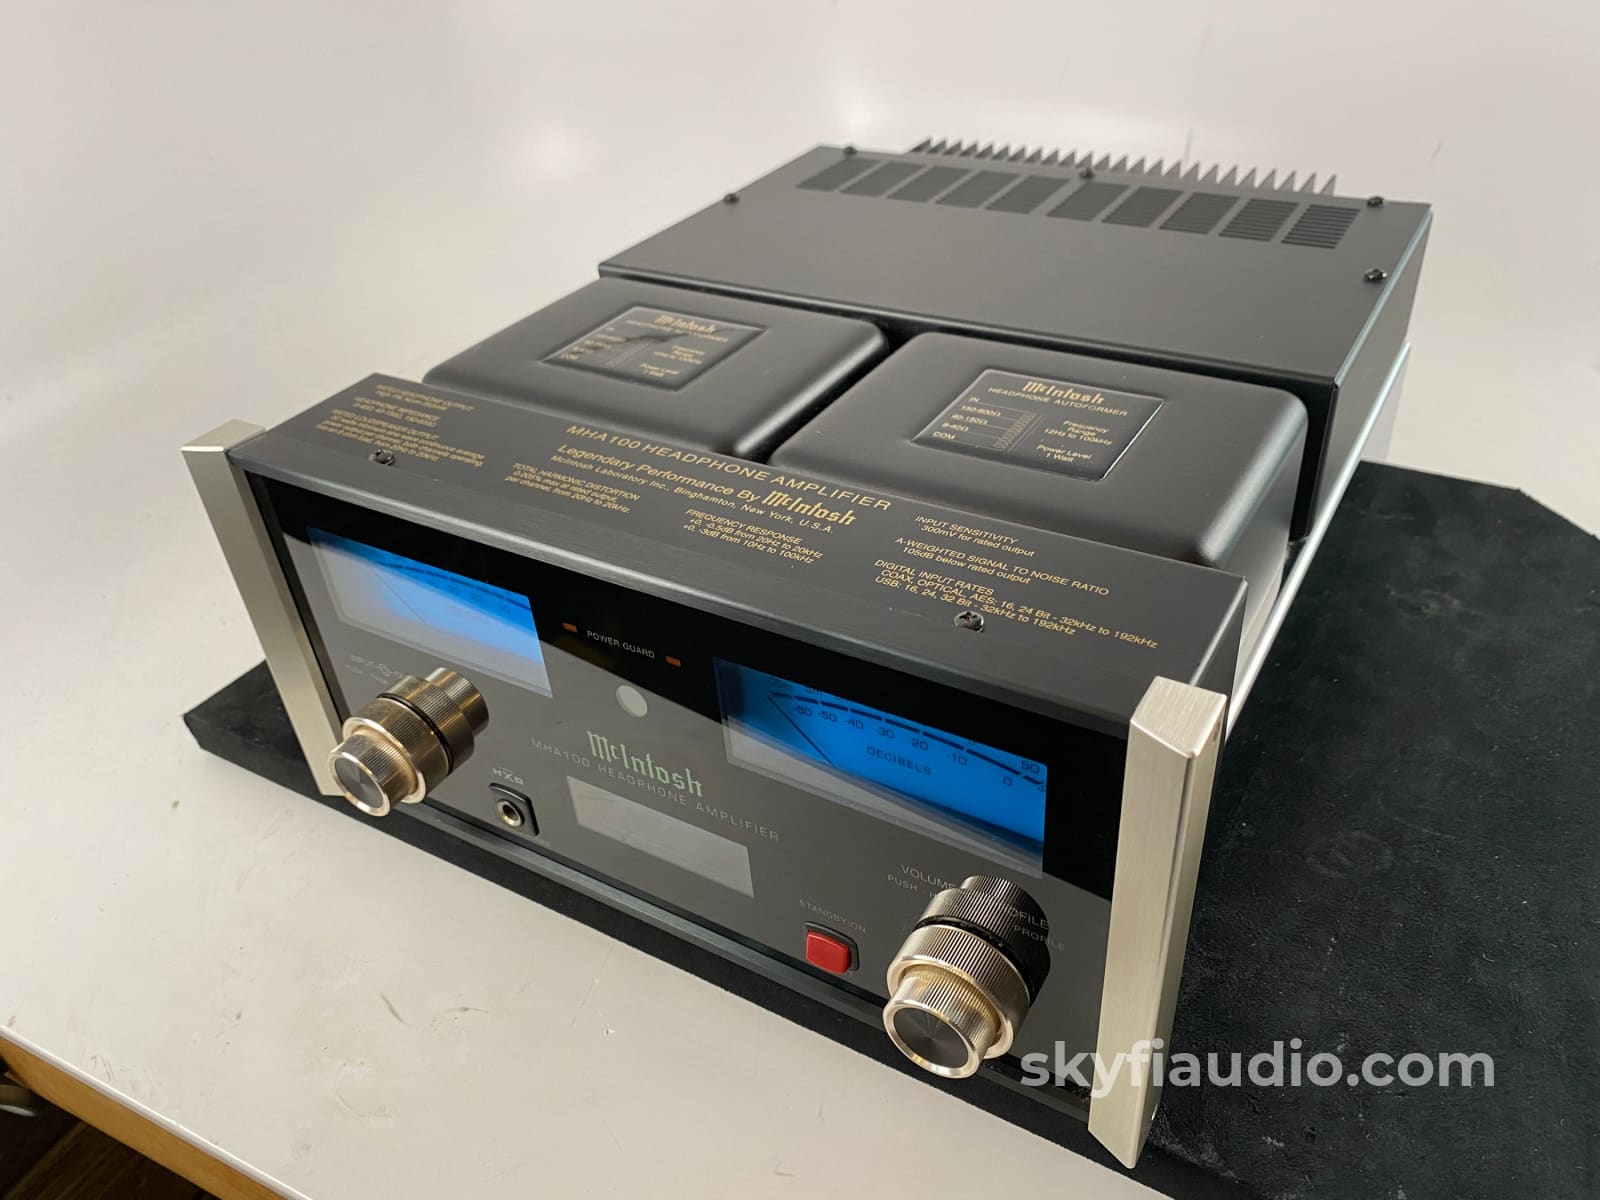 Mcintosh Mha100 Integrated Amplifier For Headphones Or Speakers